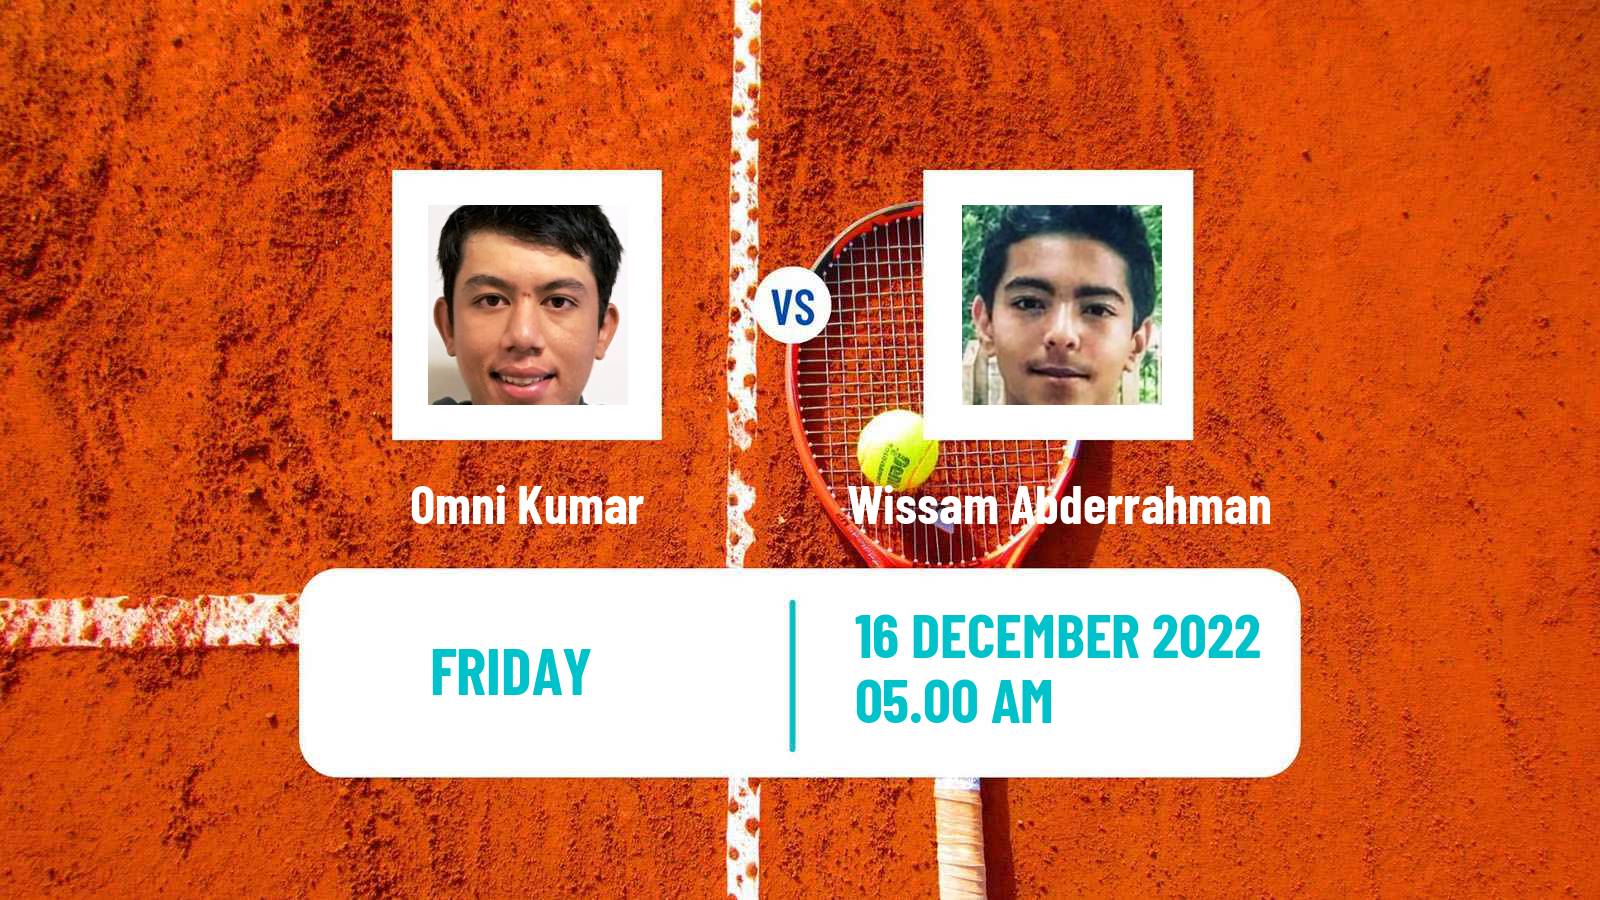 Tennis ITF Tournaments Omni Kumar - Wissam Abderrahman